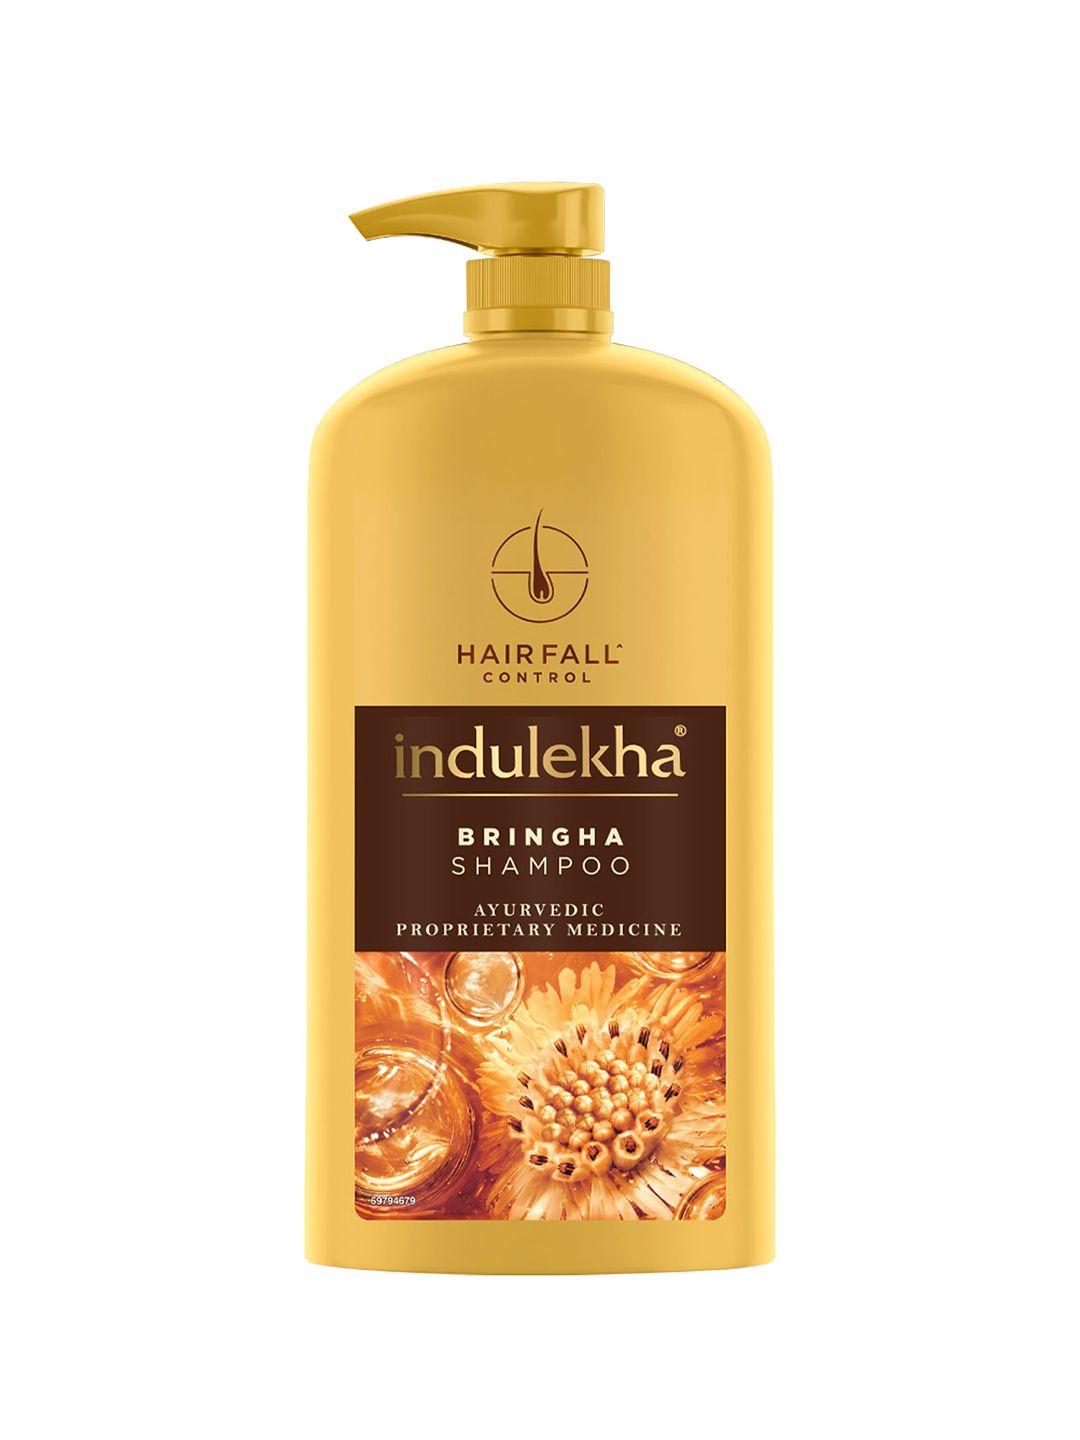 Indulekha Bringha Shampoo - Proprietary Ayurvedic Medicine for Hairfall - 1L